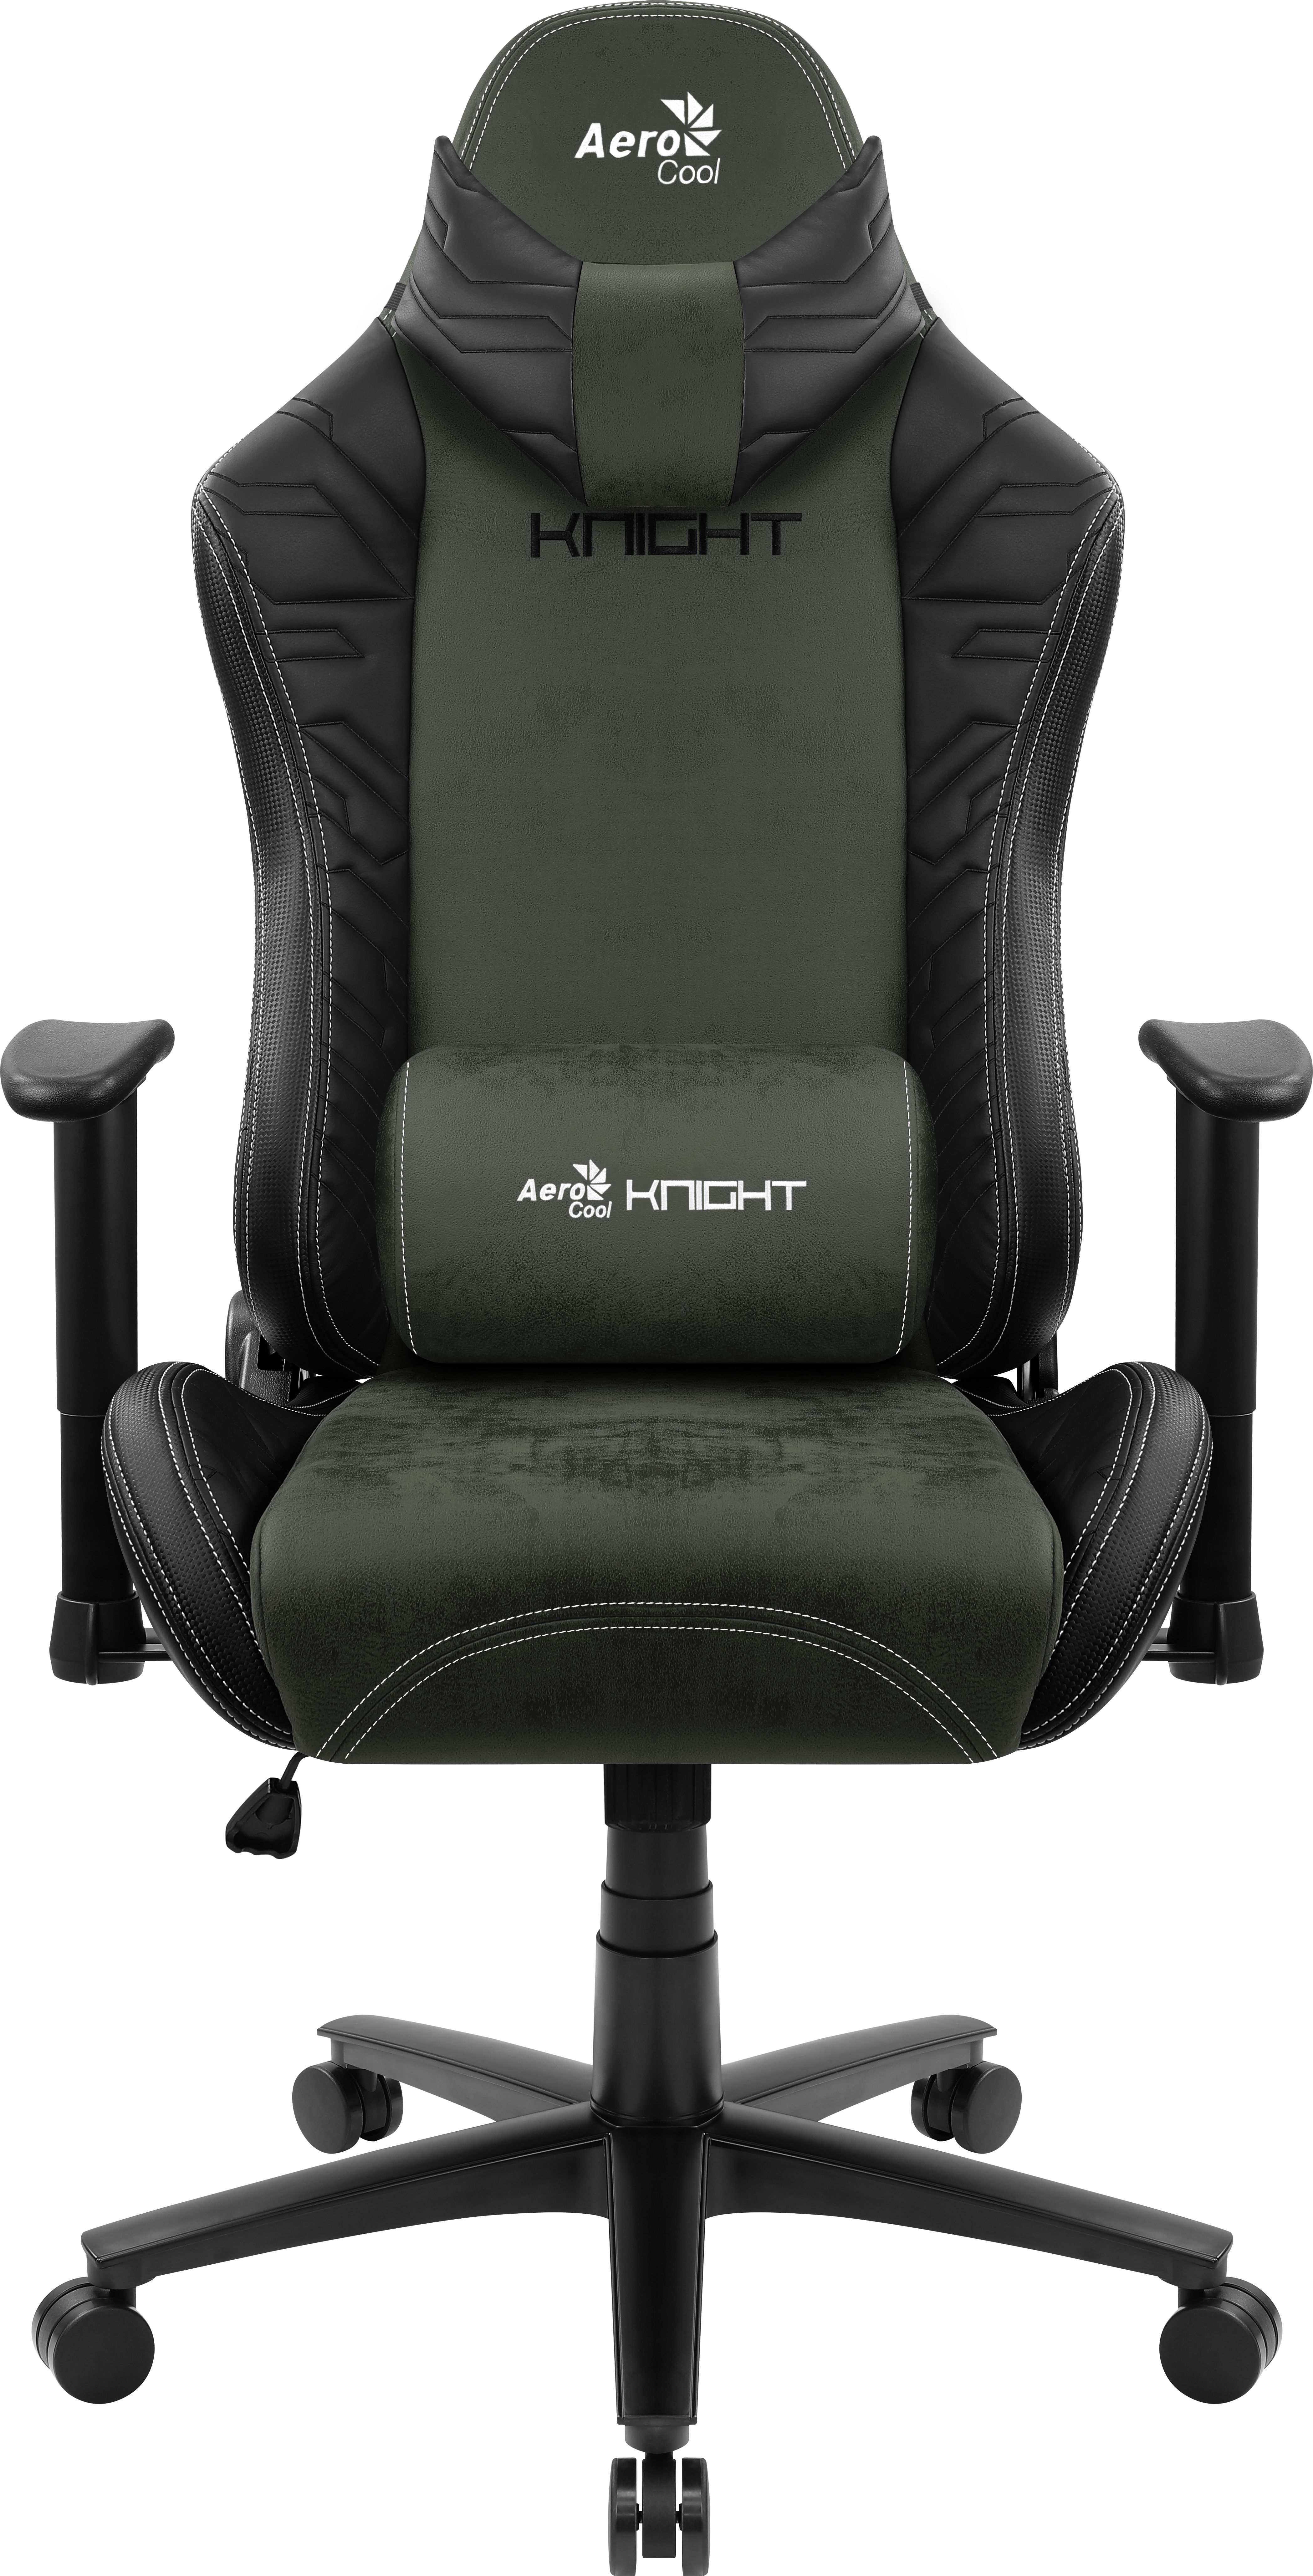 Aerocool KNIGHT AeroSuede Universal gaming chair Black, Green_1